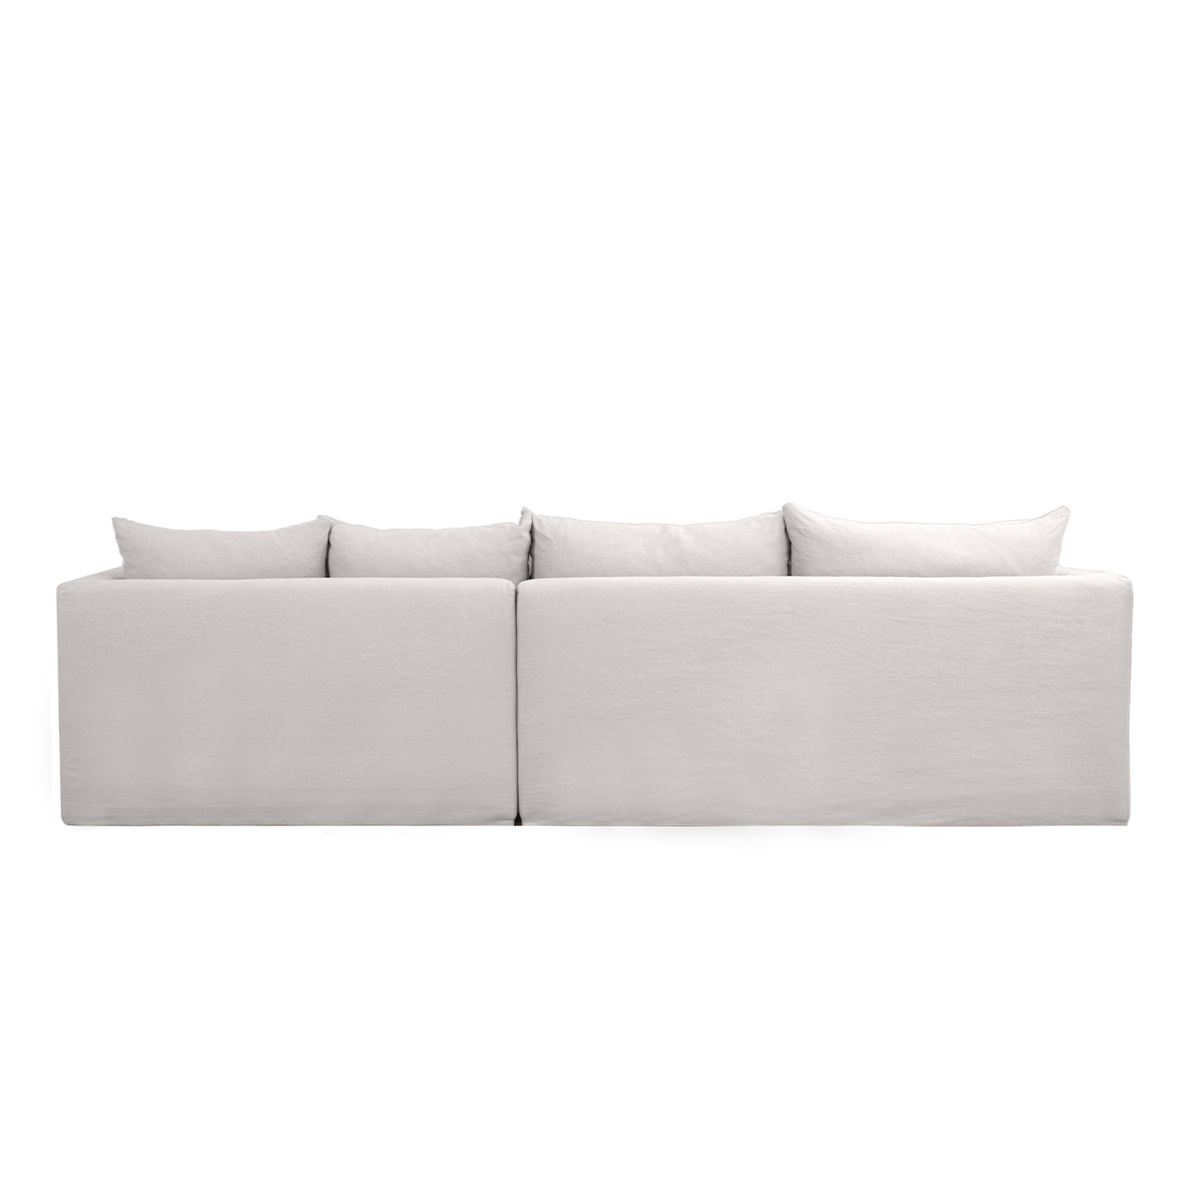 SuperBox corner sofa - Right angle, L335 x P180 x H85 cm - Linen - image 5